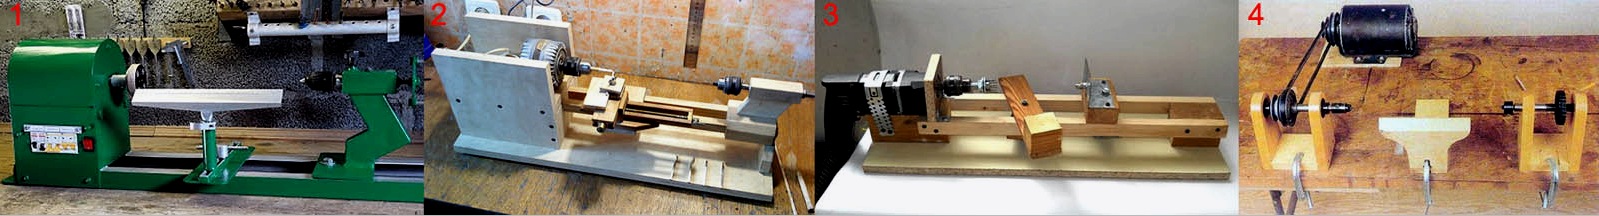 Torno de madera: dispositivo, unidades estructurales, fabricación casera.